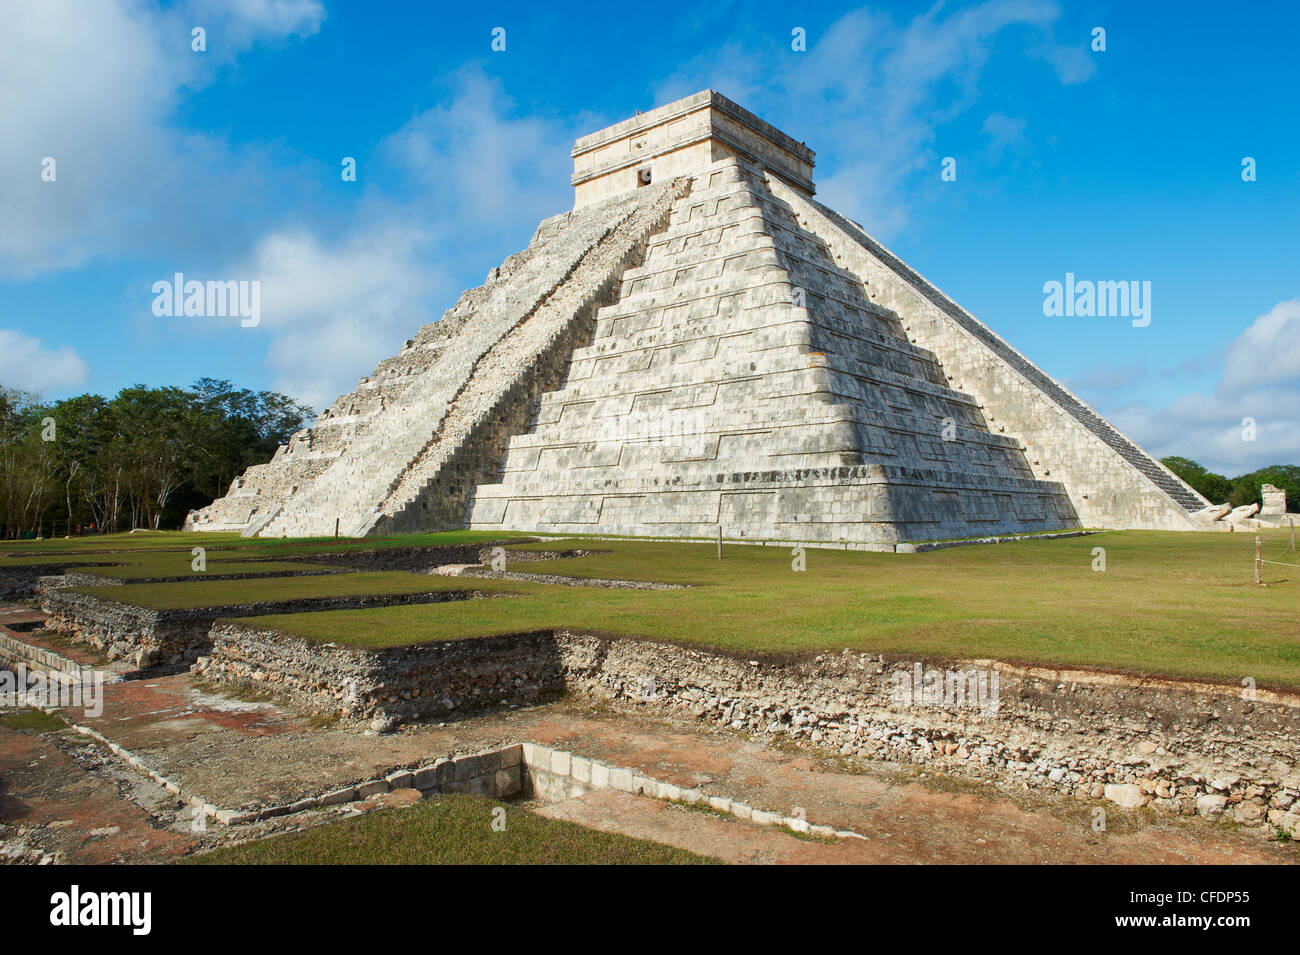 El Castillo pyramid (Temple of Kukulcan) in the ancient Mayan ruins of Chichen Itza, UNESCO World Heritage Site, Yucatan, Mexico Stock Photo